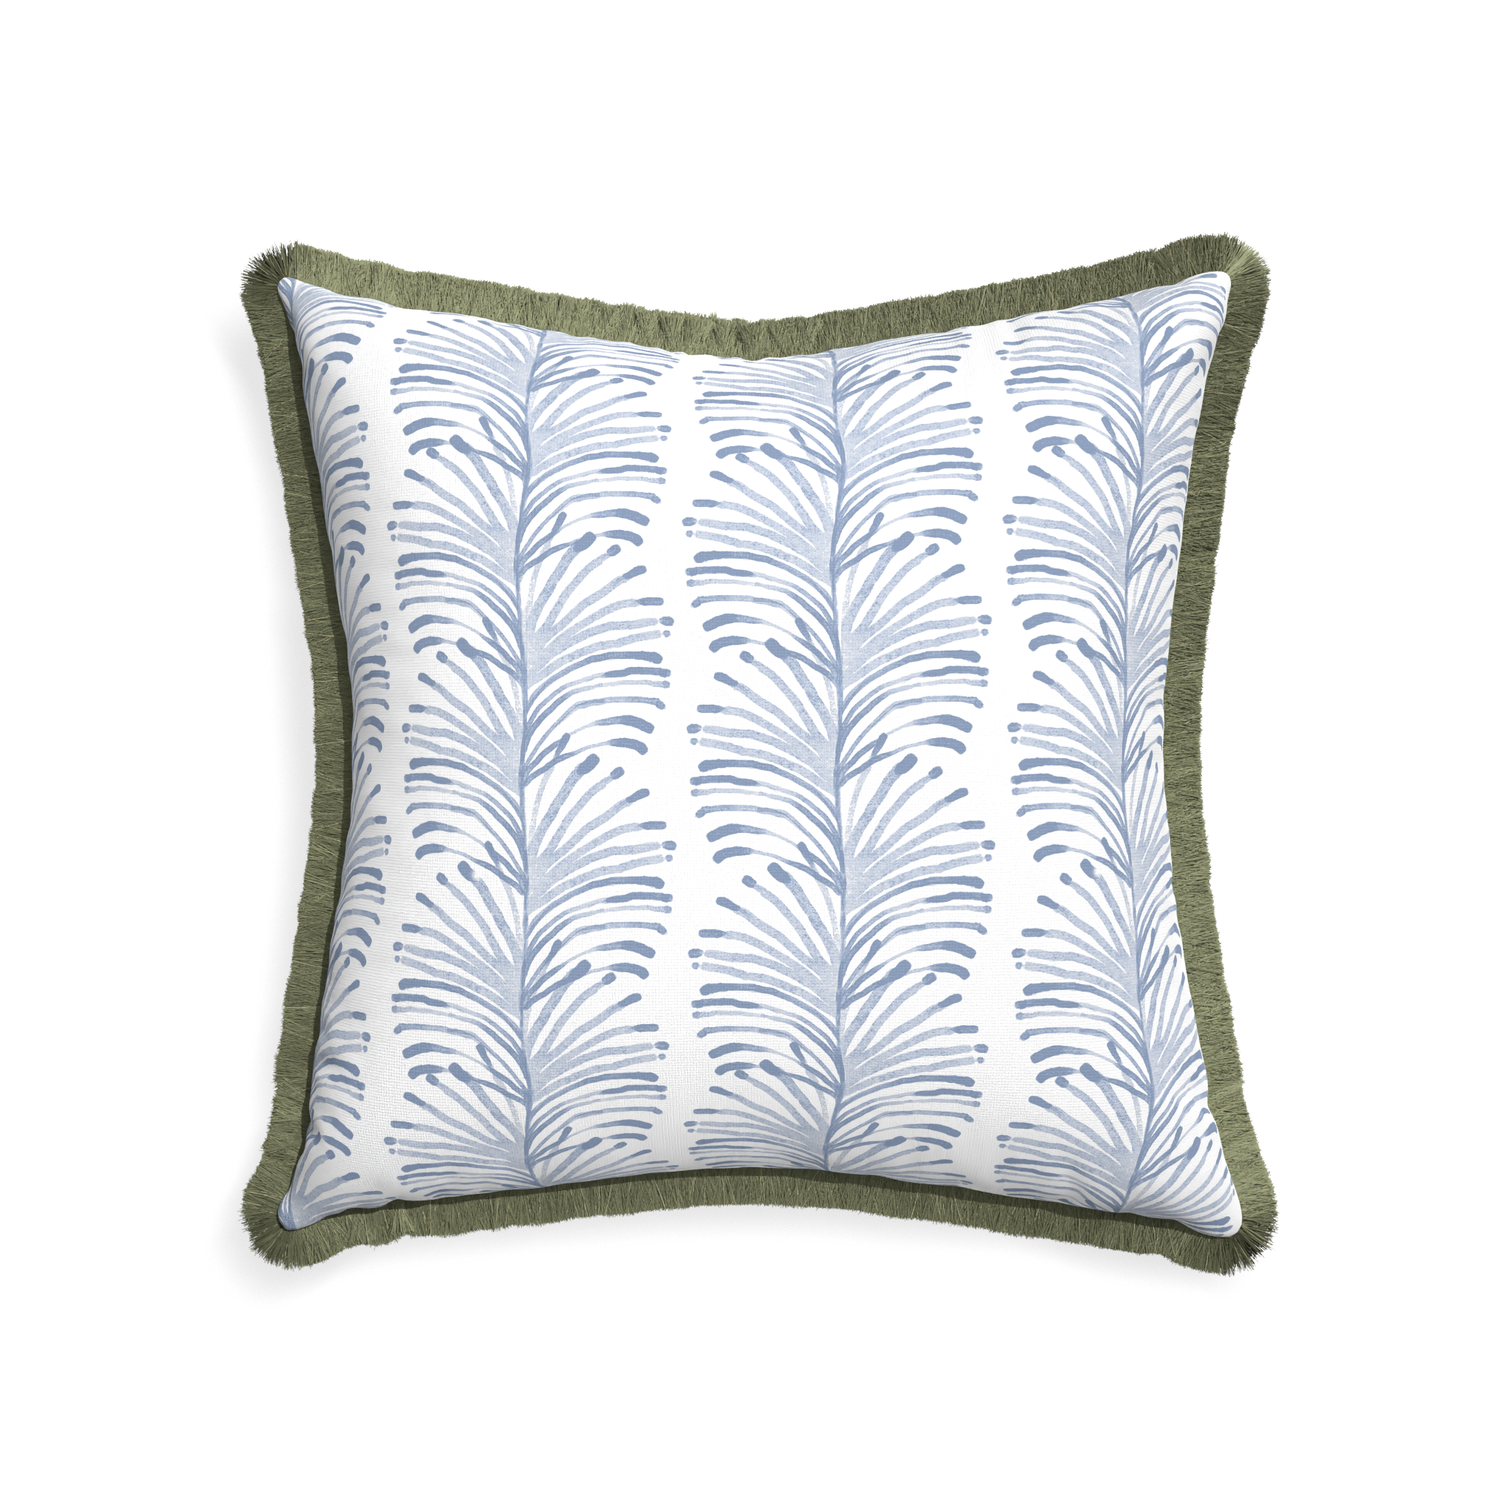 22-square emma sky custom pillow with sage fringe on white background